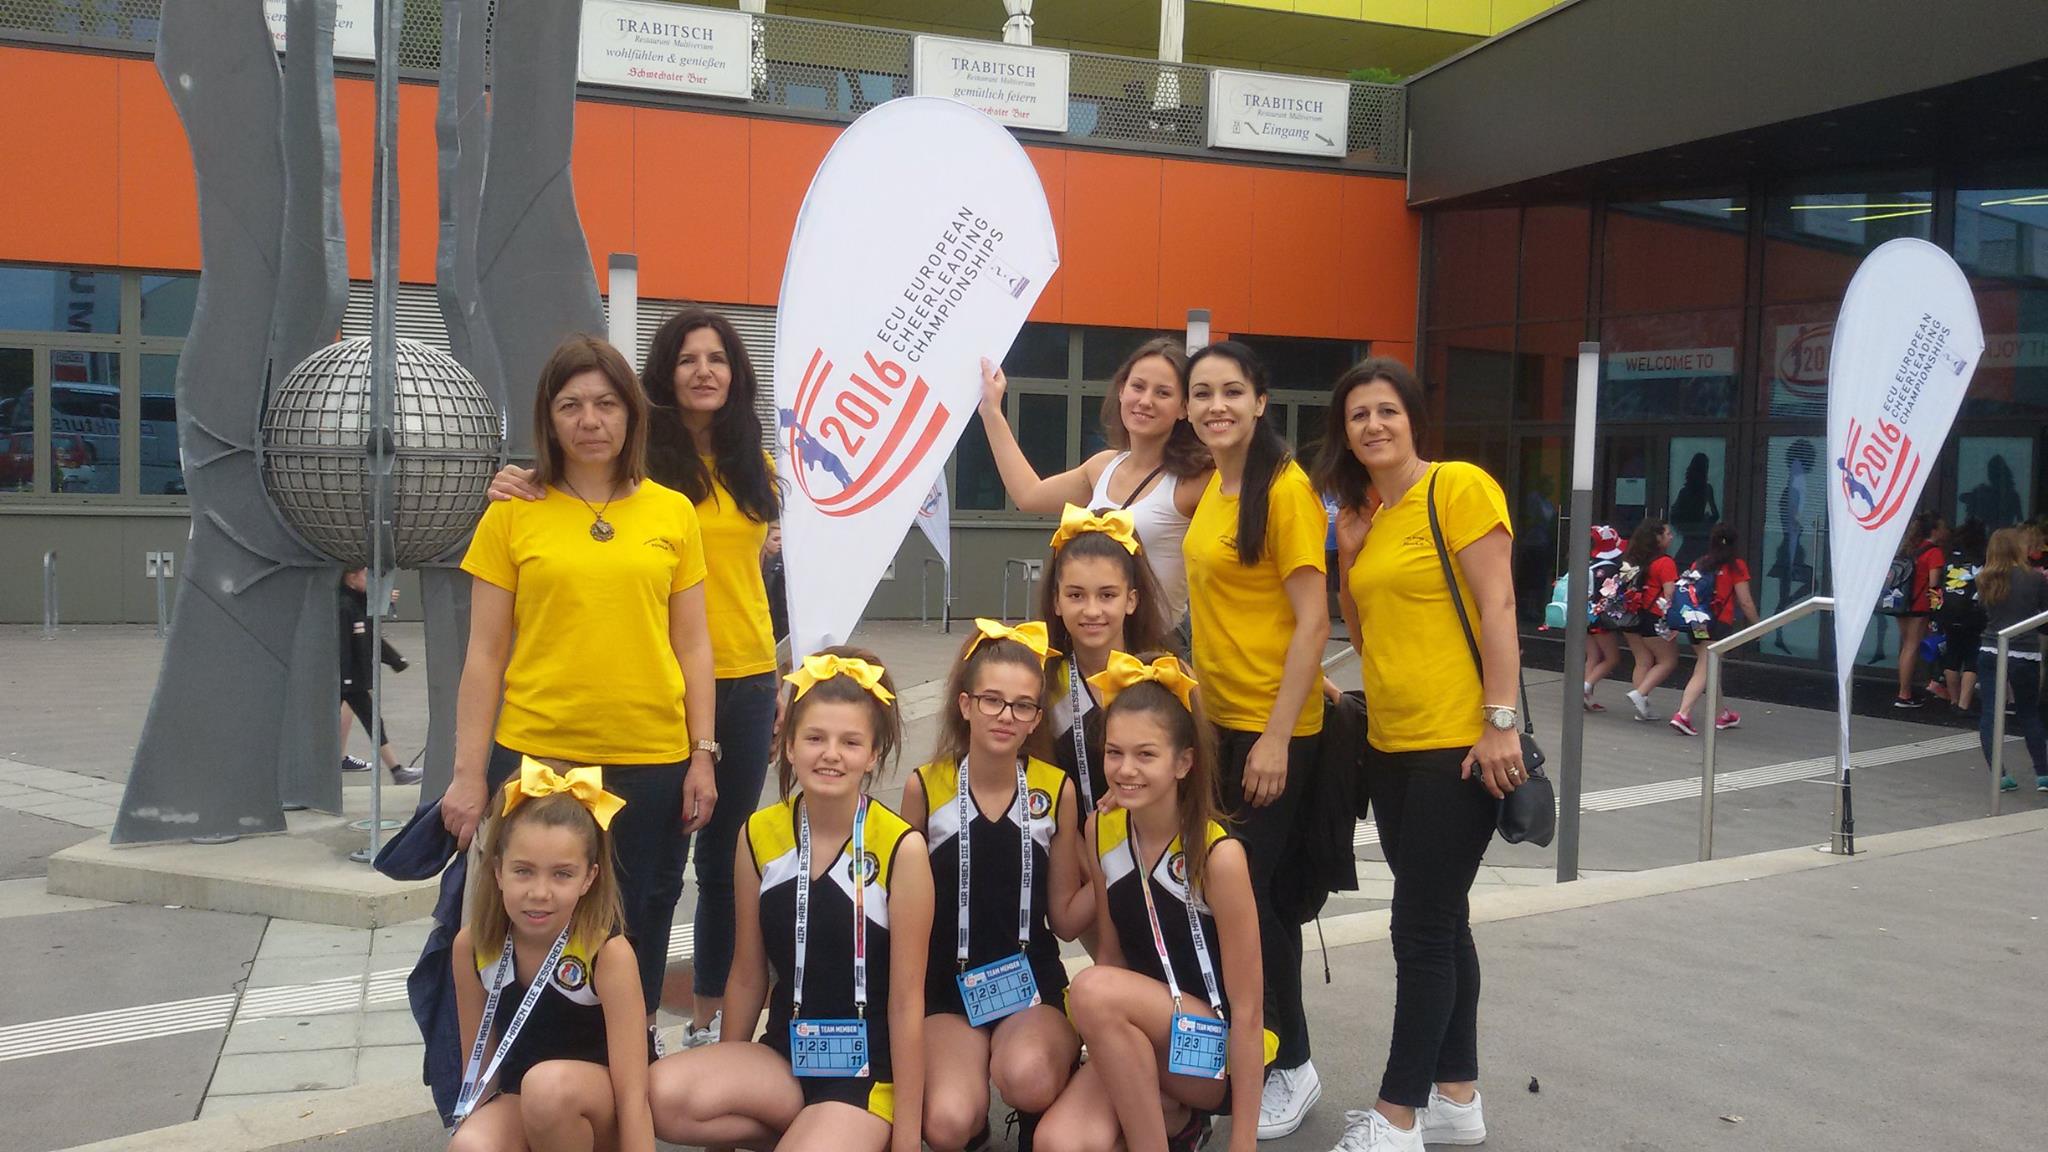 Hrvatski plesni klub “Posušje” nastupio na Europskom cheerleading prvenstvu u Beču